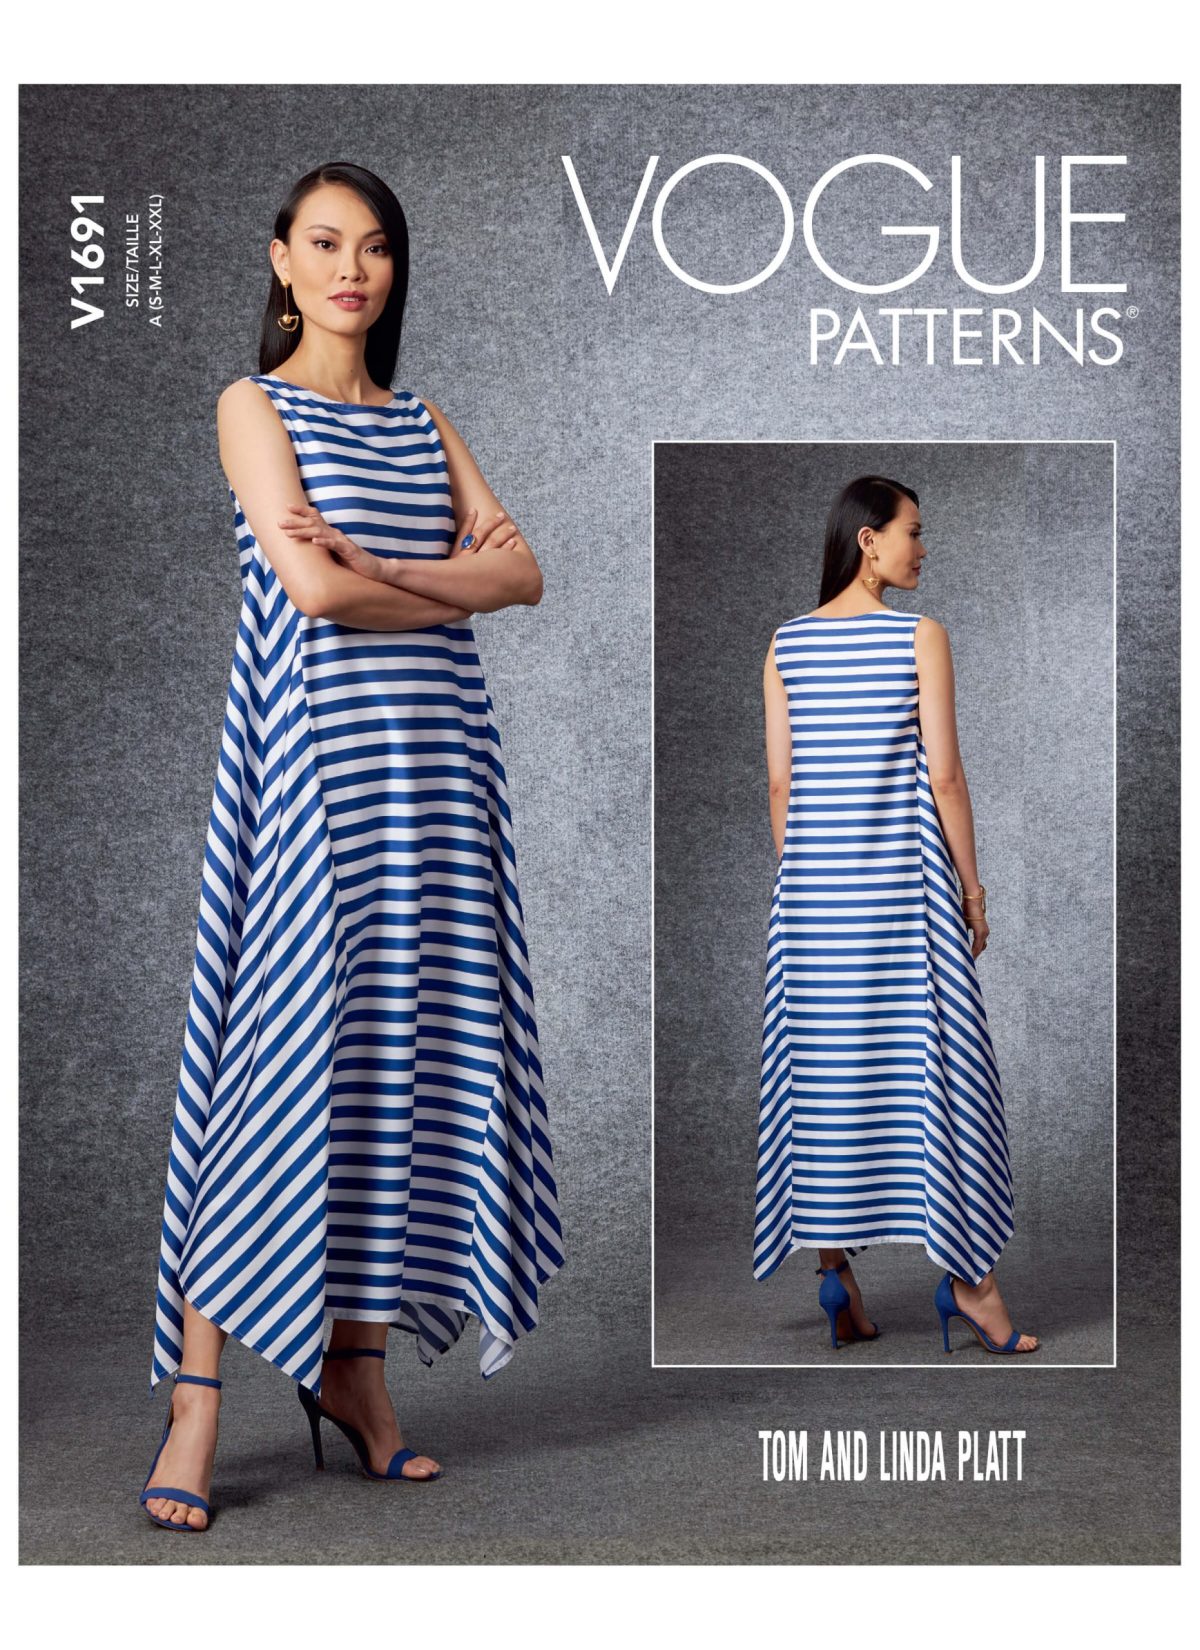 Vogue Patterns V1691 Misses' Dress Tom and Linda Platt